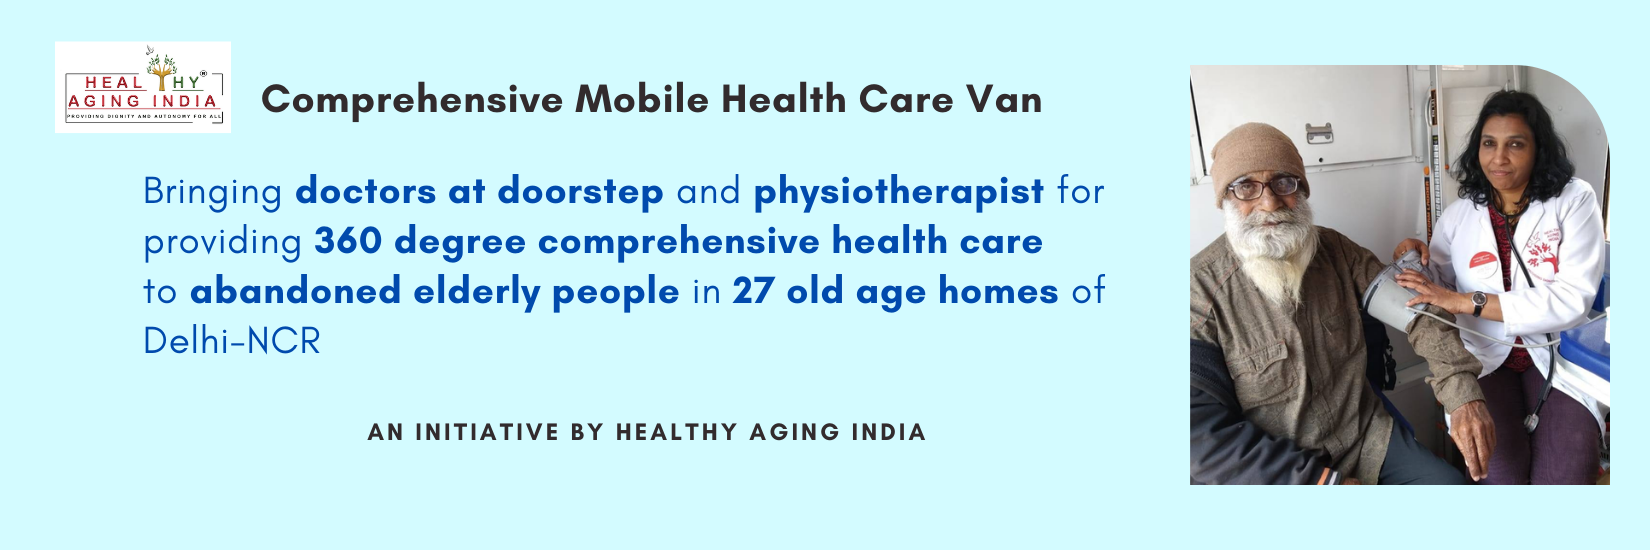 Comprehensive Mobile health care van